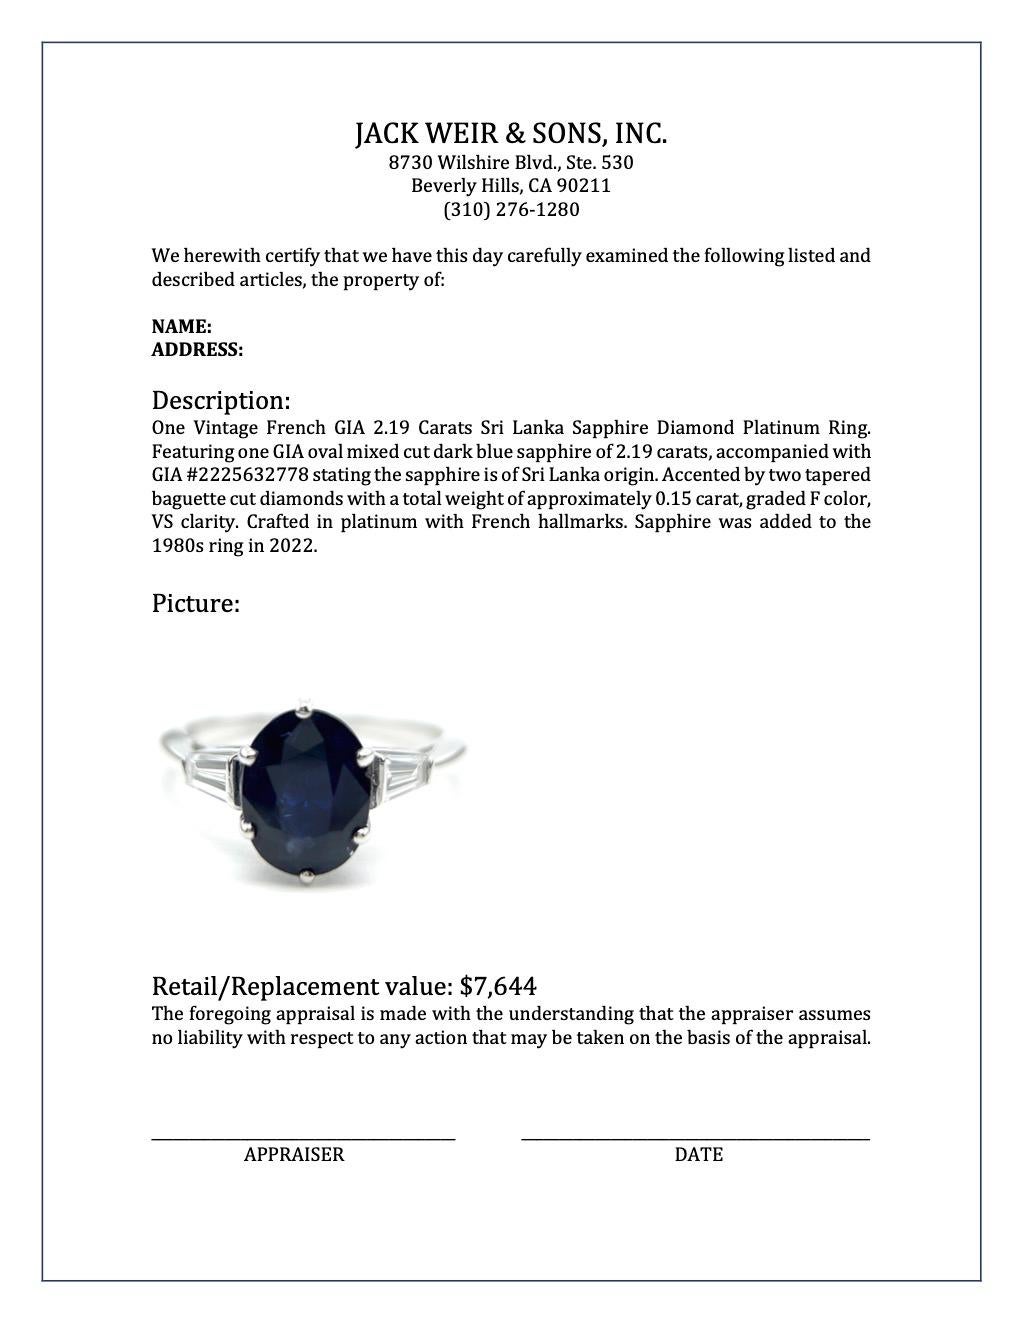 Vintage French GIA 2.19 Carats Sri Lanka Sapphire Diamond Platinum Ring 3